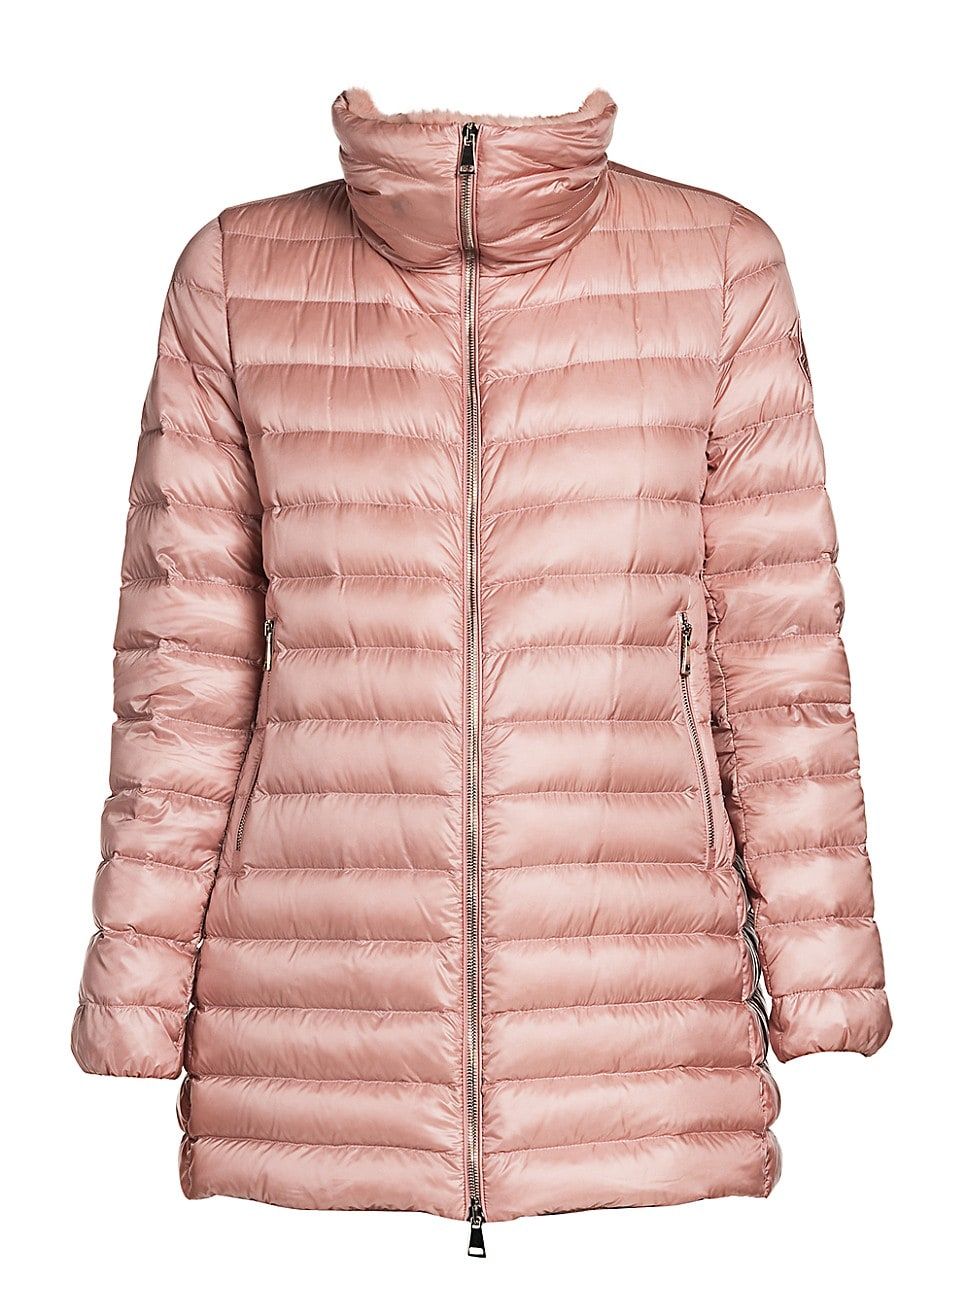 Moncler Women's Souffre Giubbotto Mink Fur-Collar Puffer Coat - Pink - Size Small | Saks Fifth Avenue